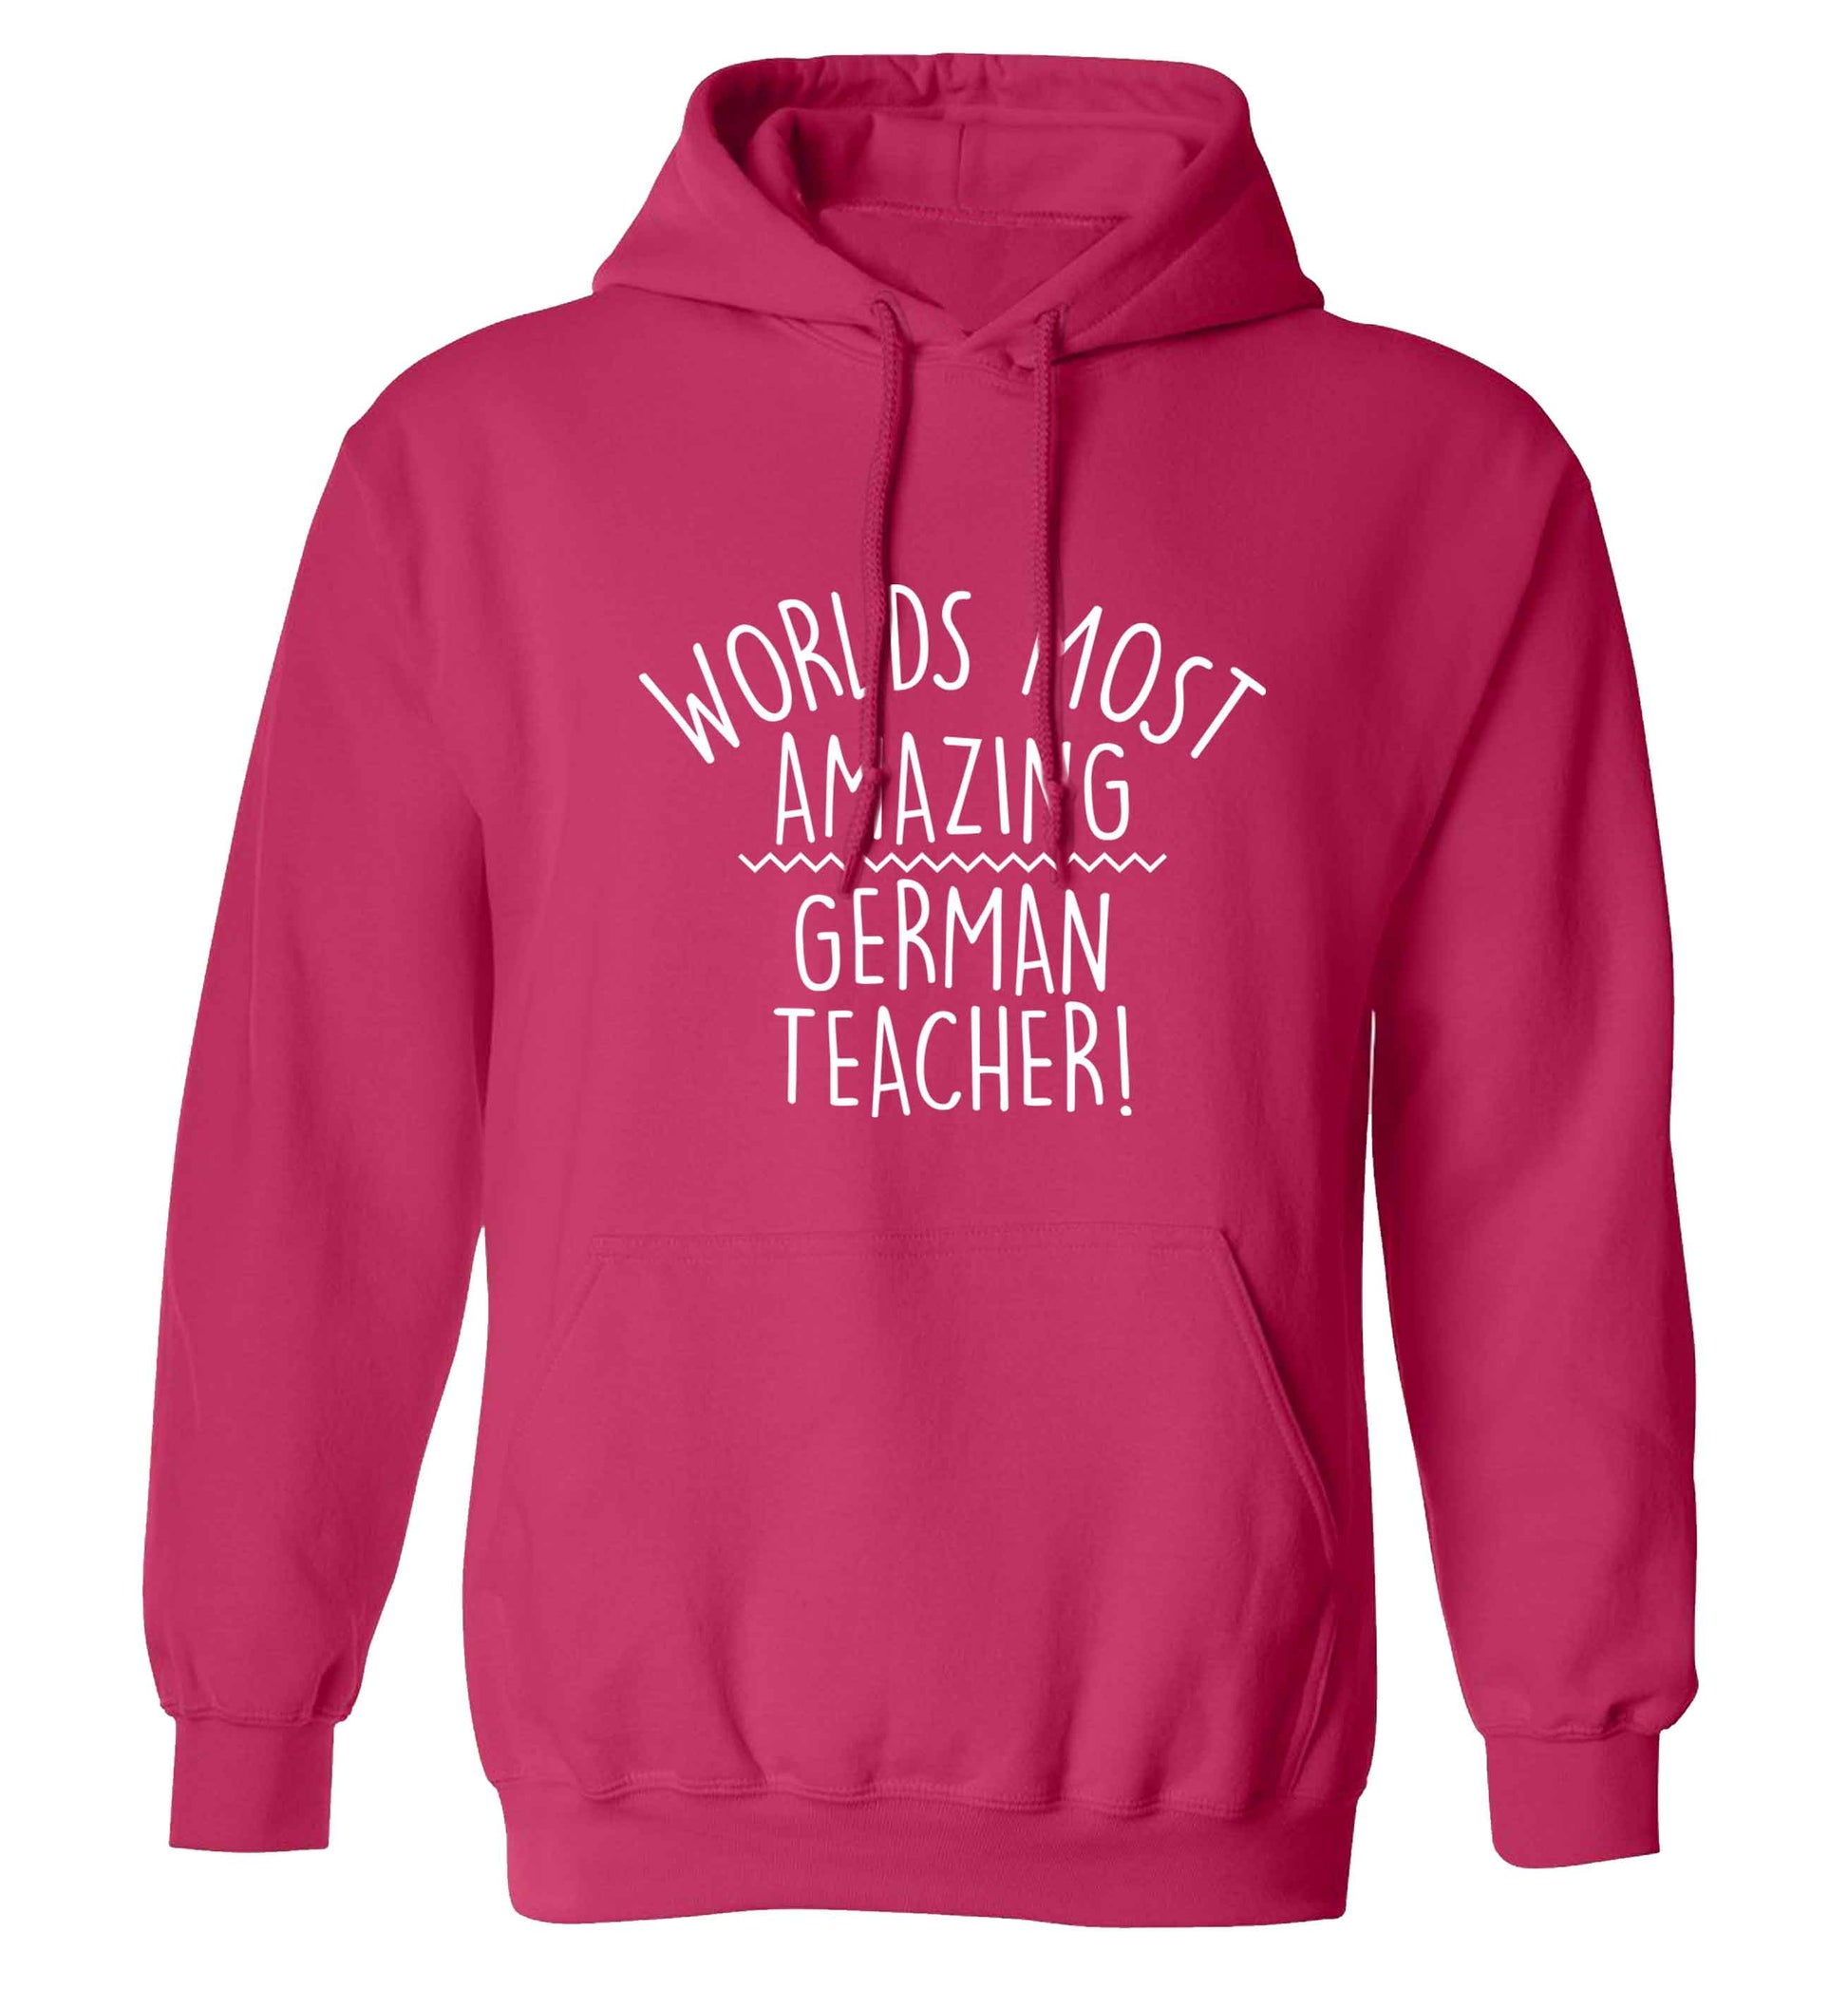 Worlds most amazing German teacher adults unisex pink hoodie 2XL